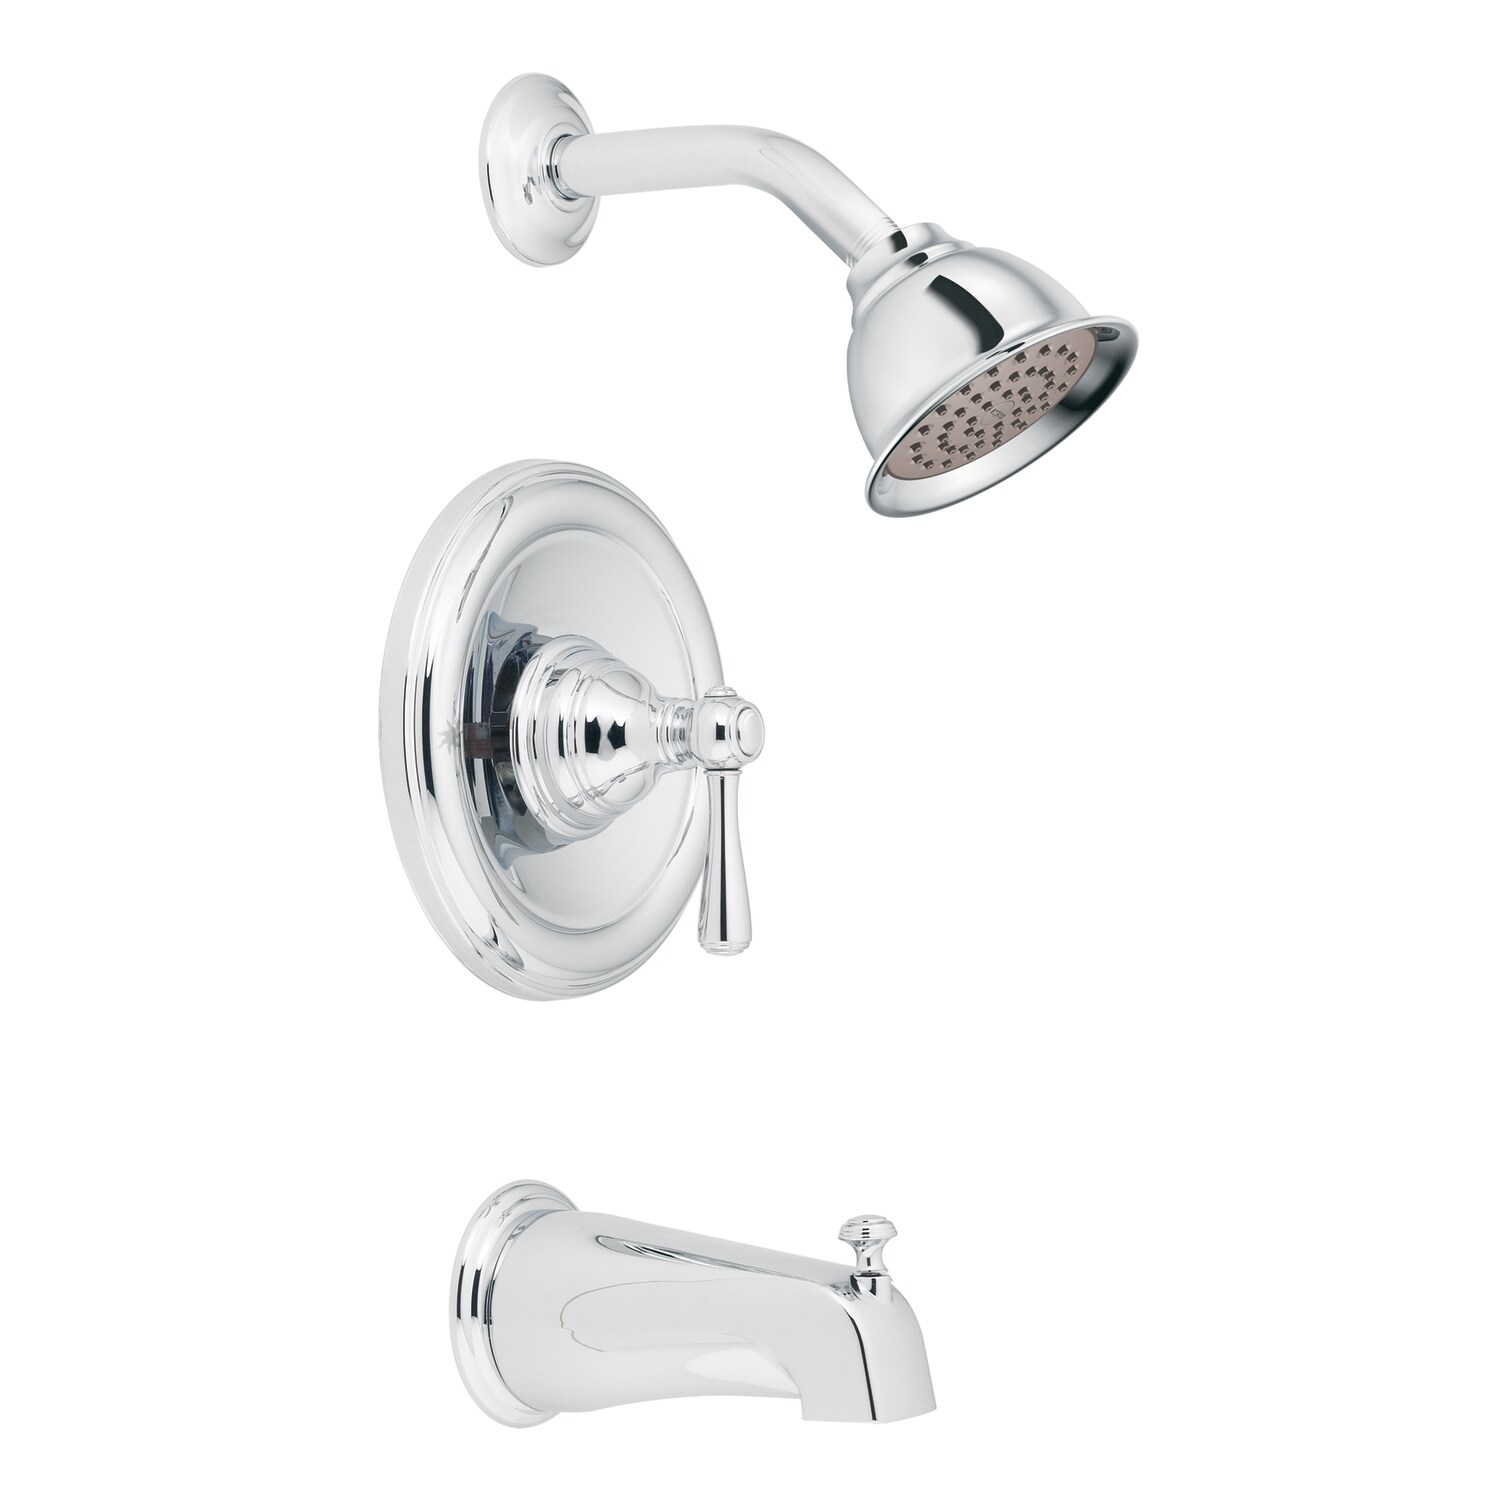 1-Handle Valve Trim Kit in Chrome for MOEN Tub/Shower Faucets No valve 